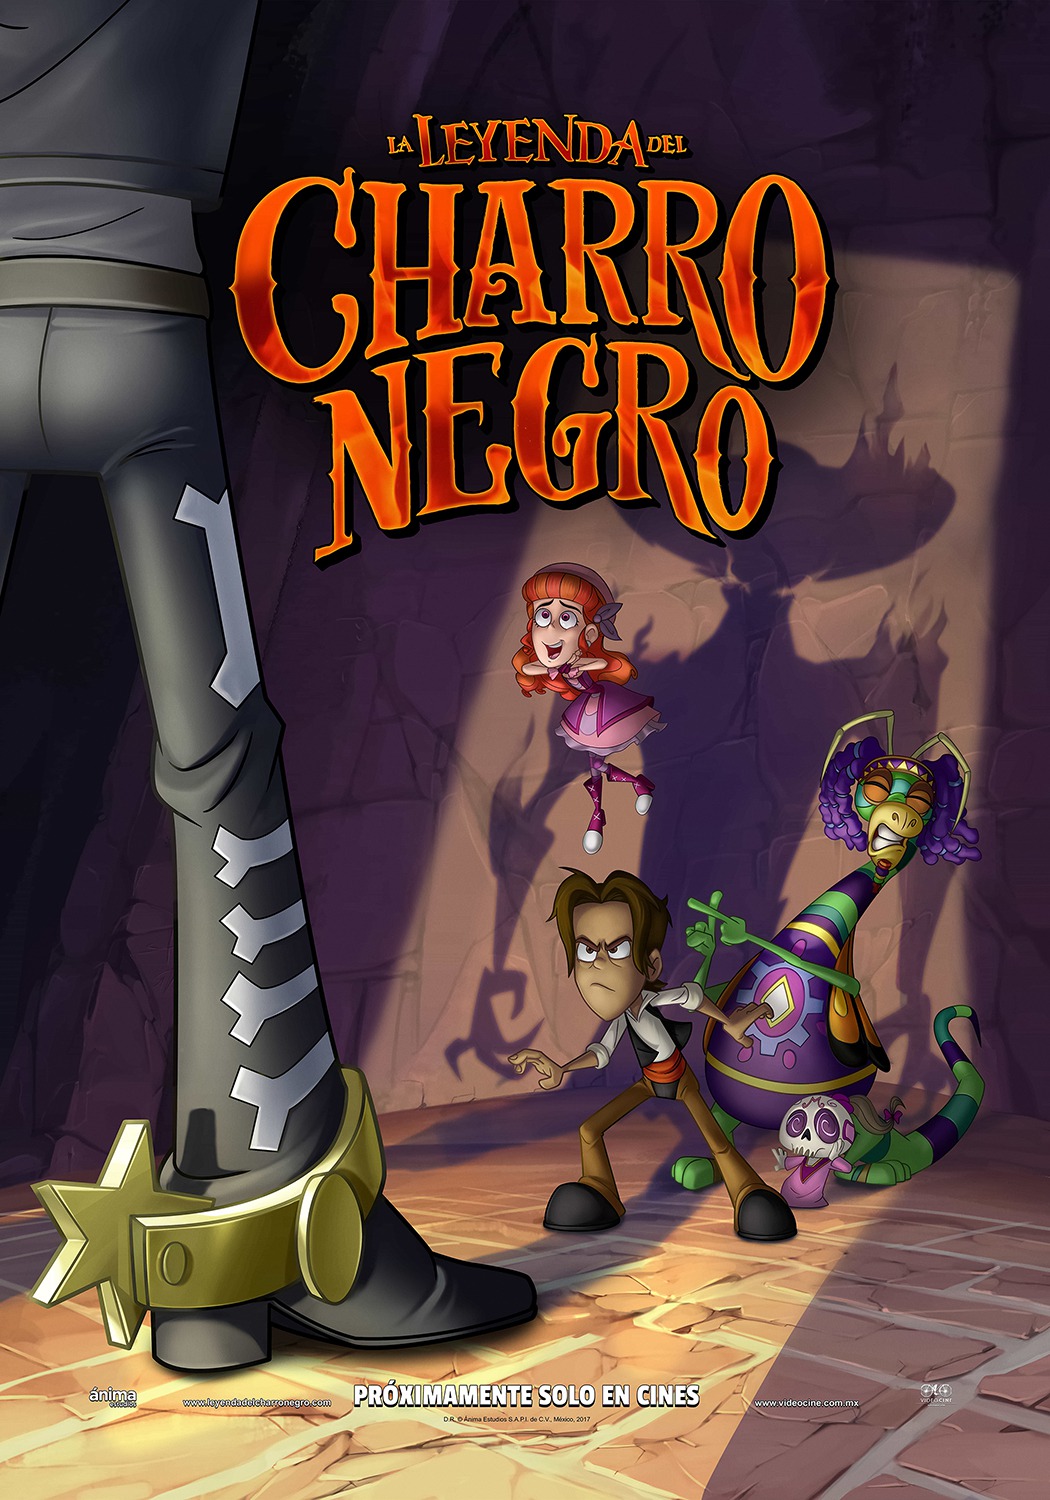 Extra Large Movie Poster Image for La Leyenda del Charro Negro (#1 of 2)